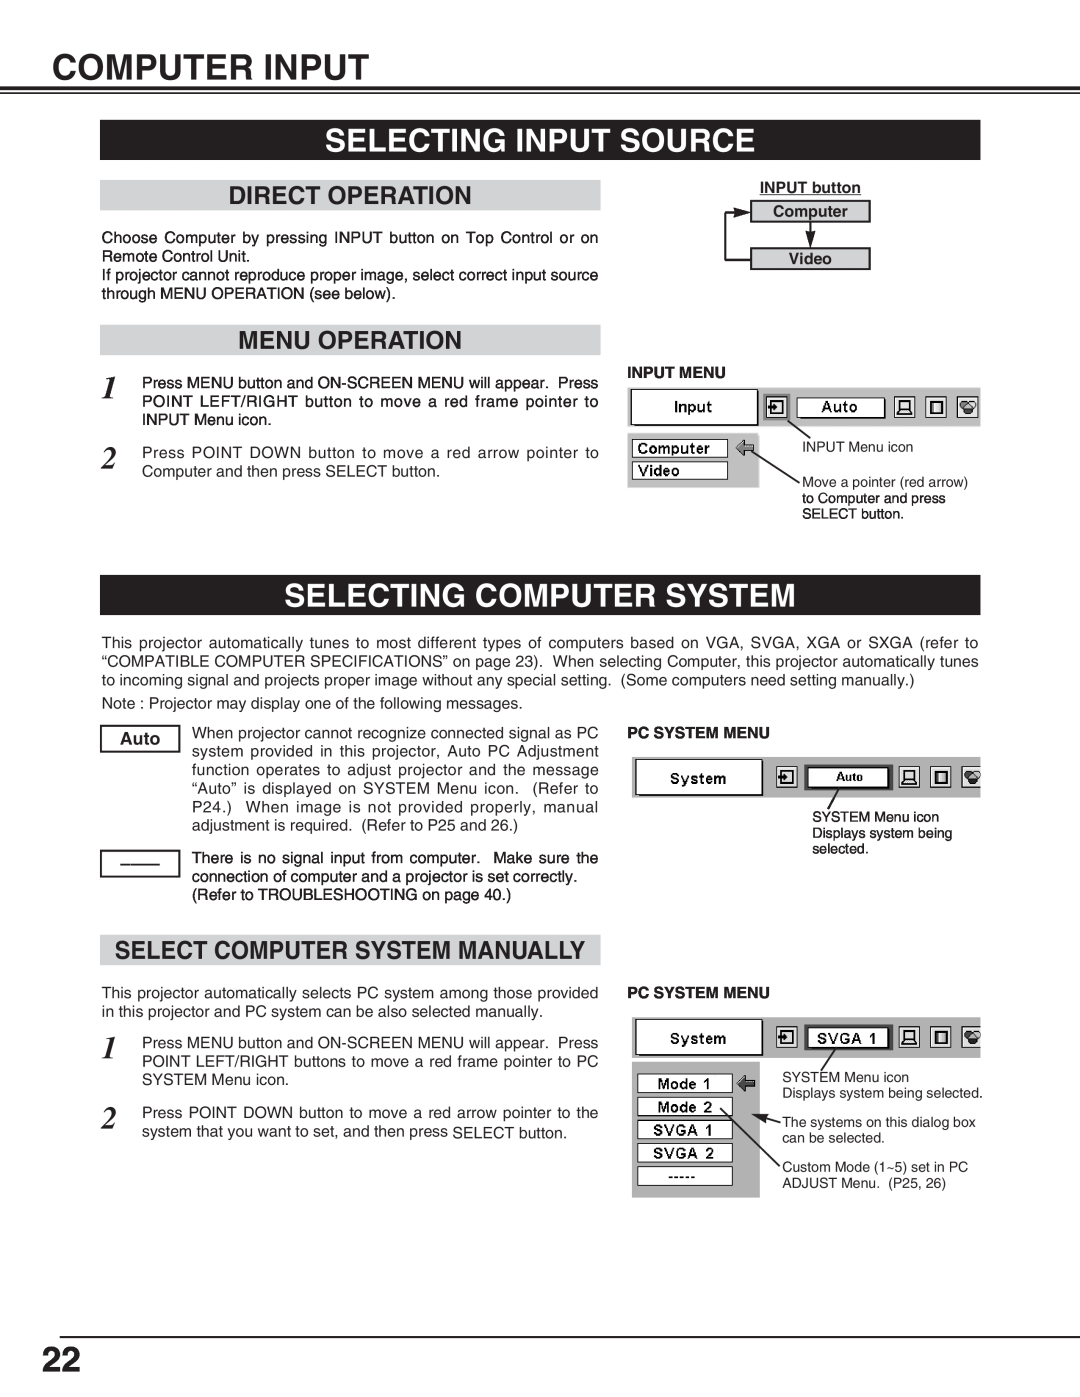 BOXLIGHT cp-16t manual Computer Input, Selecting Input Source, Selecting Computer System, Select Computer System Manually 